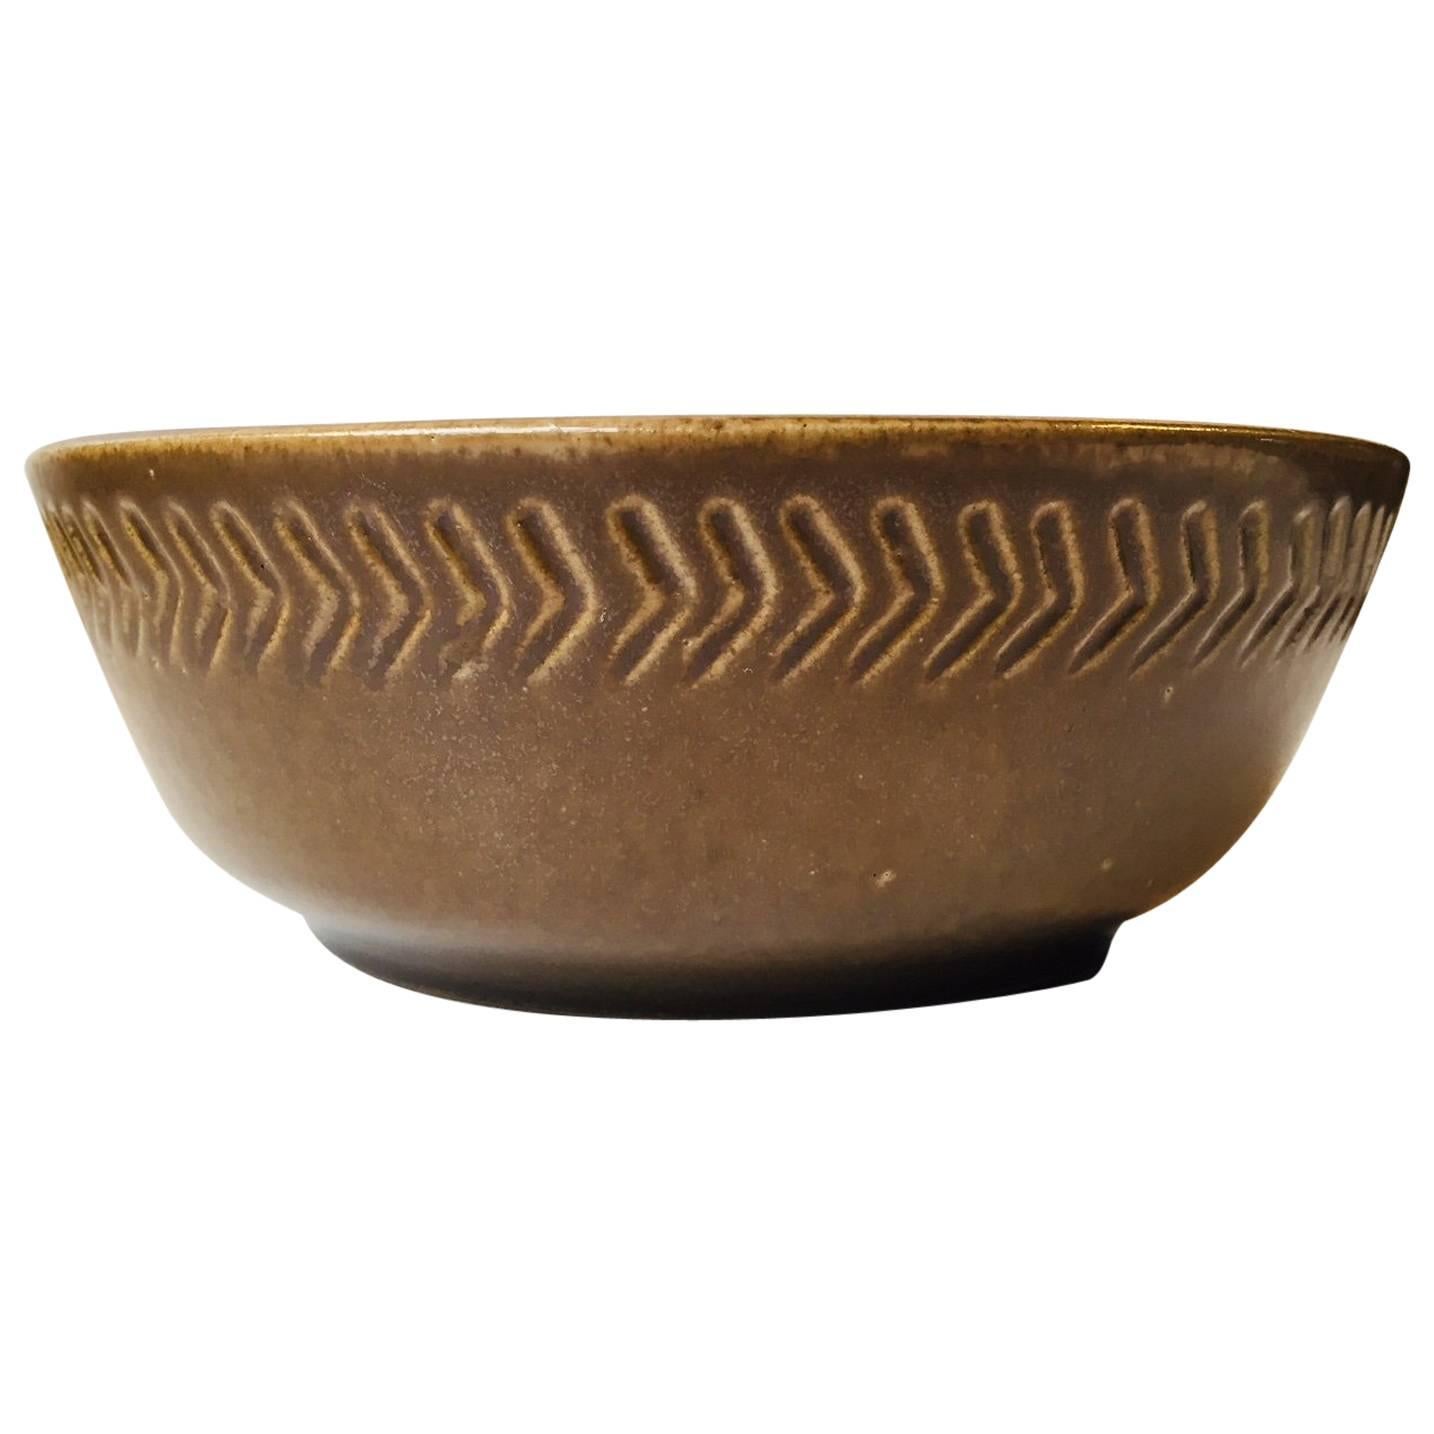 Unique Swedish Modern Pottery Bowl with Geometric Decor by Yngve Blixt, Hoganas